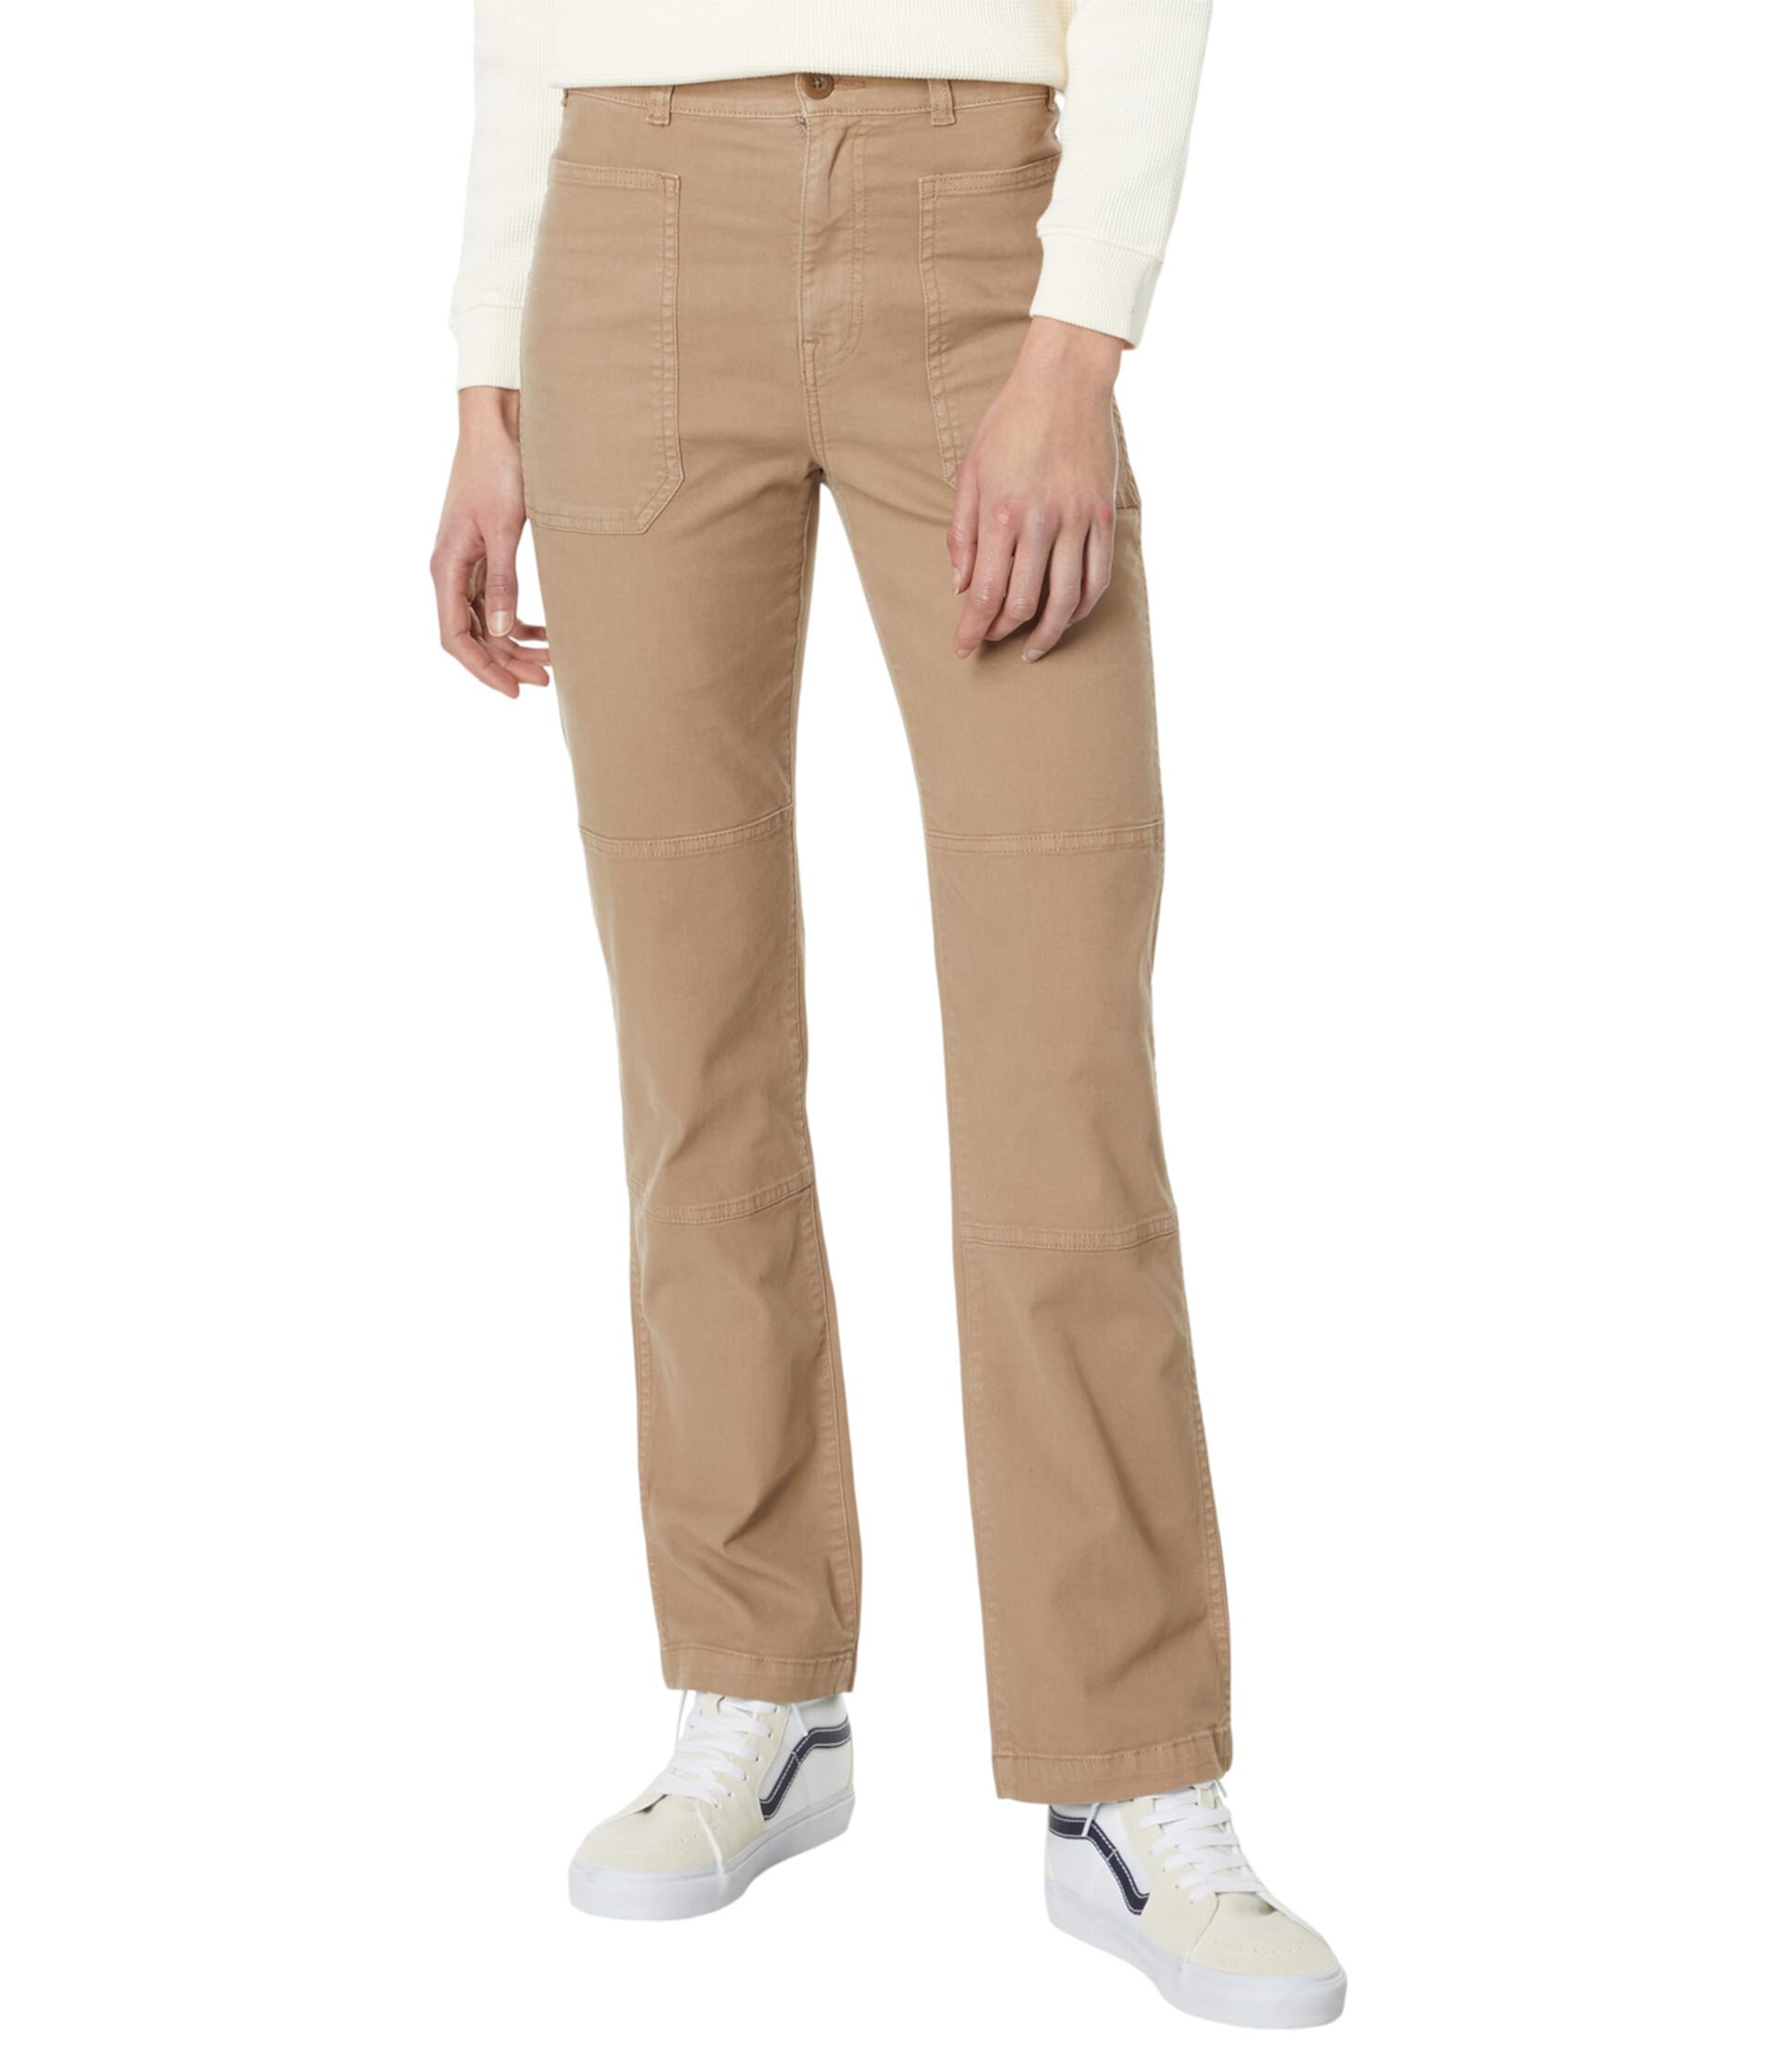 Прямые брюки с карманами в стиле 90-х Madewell